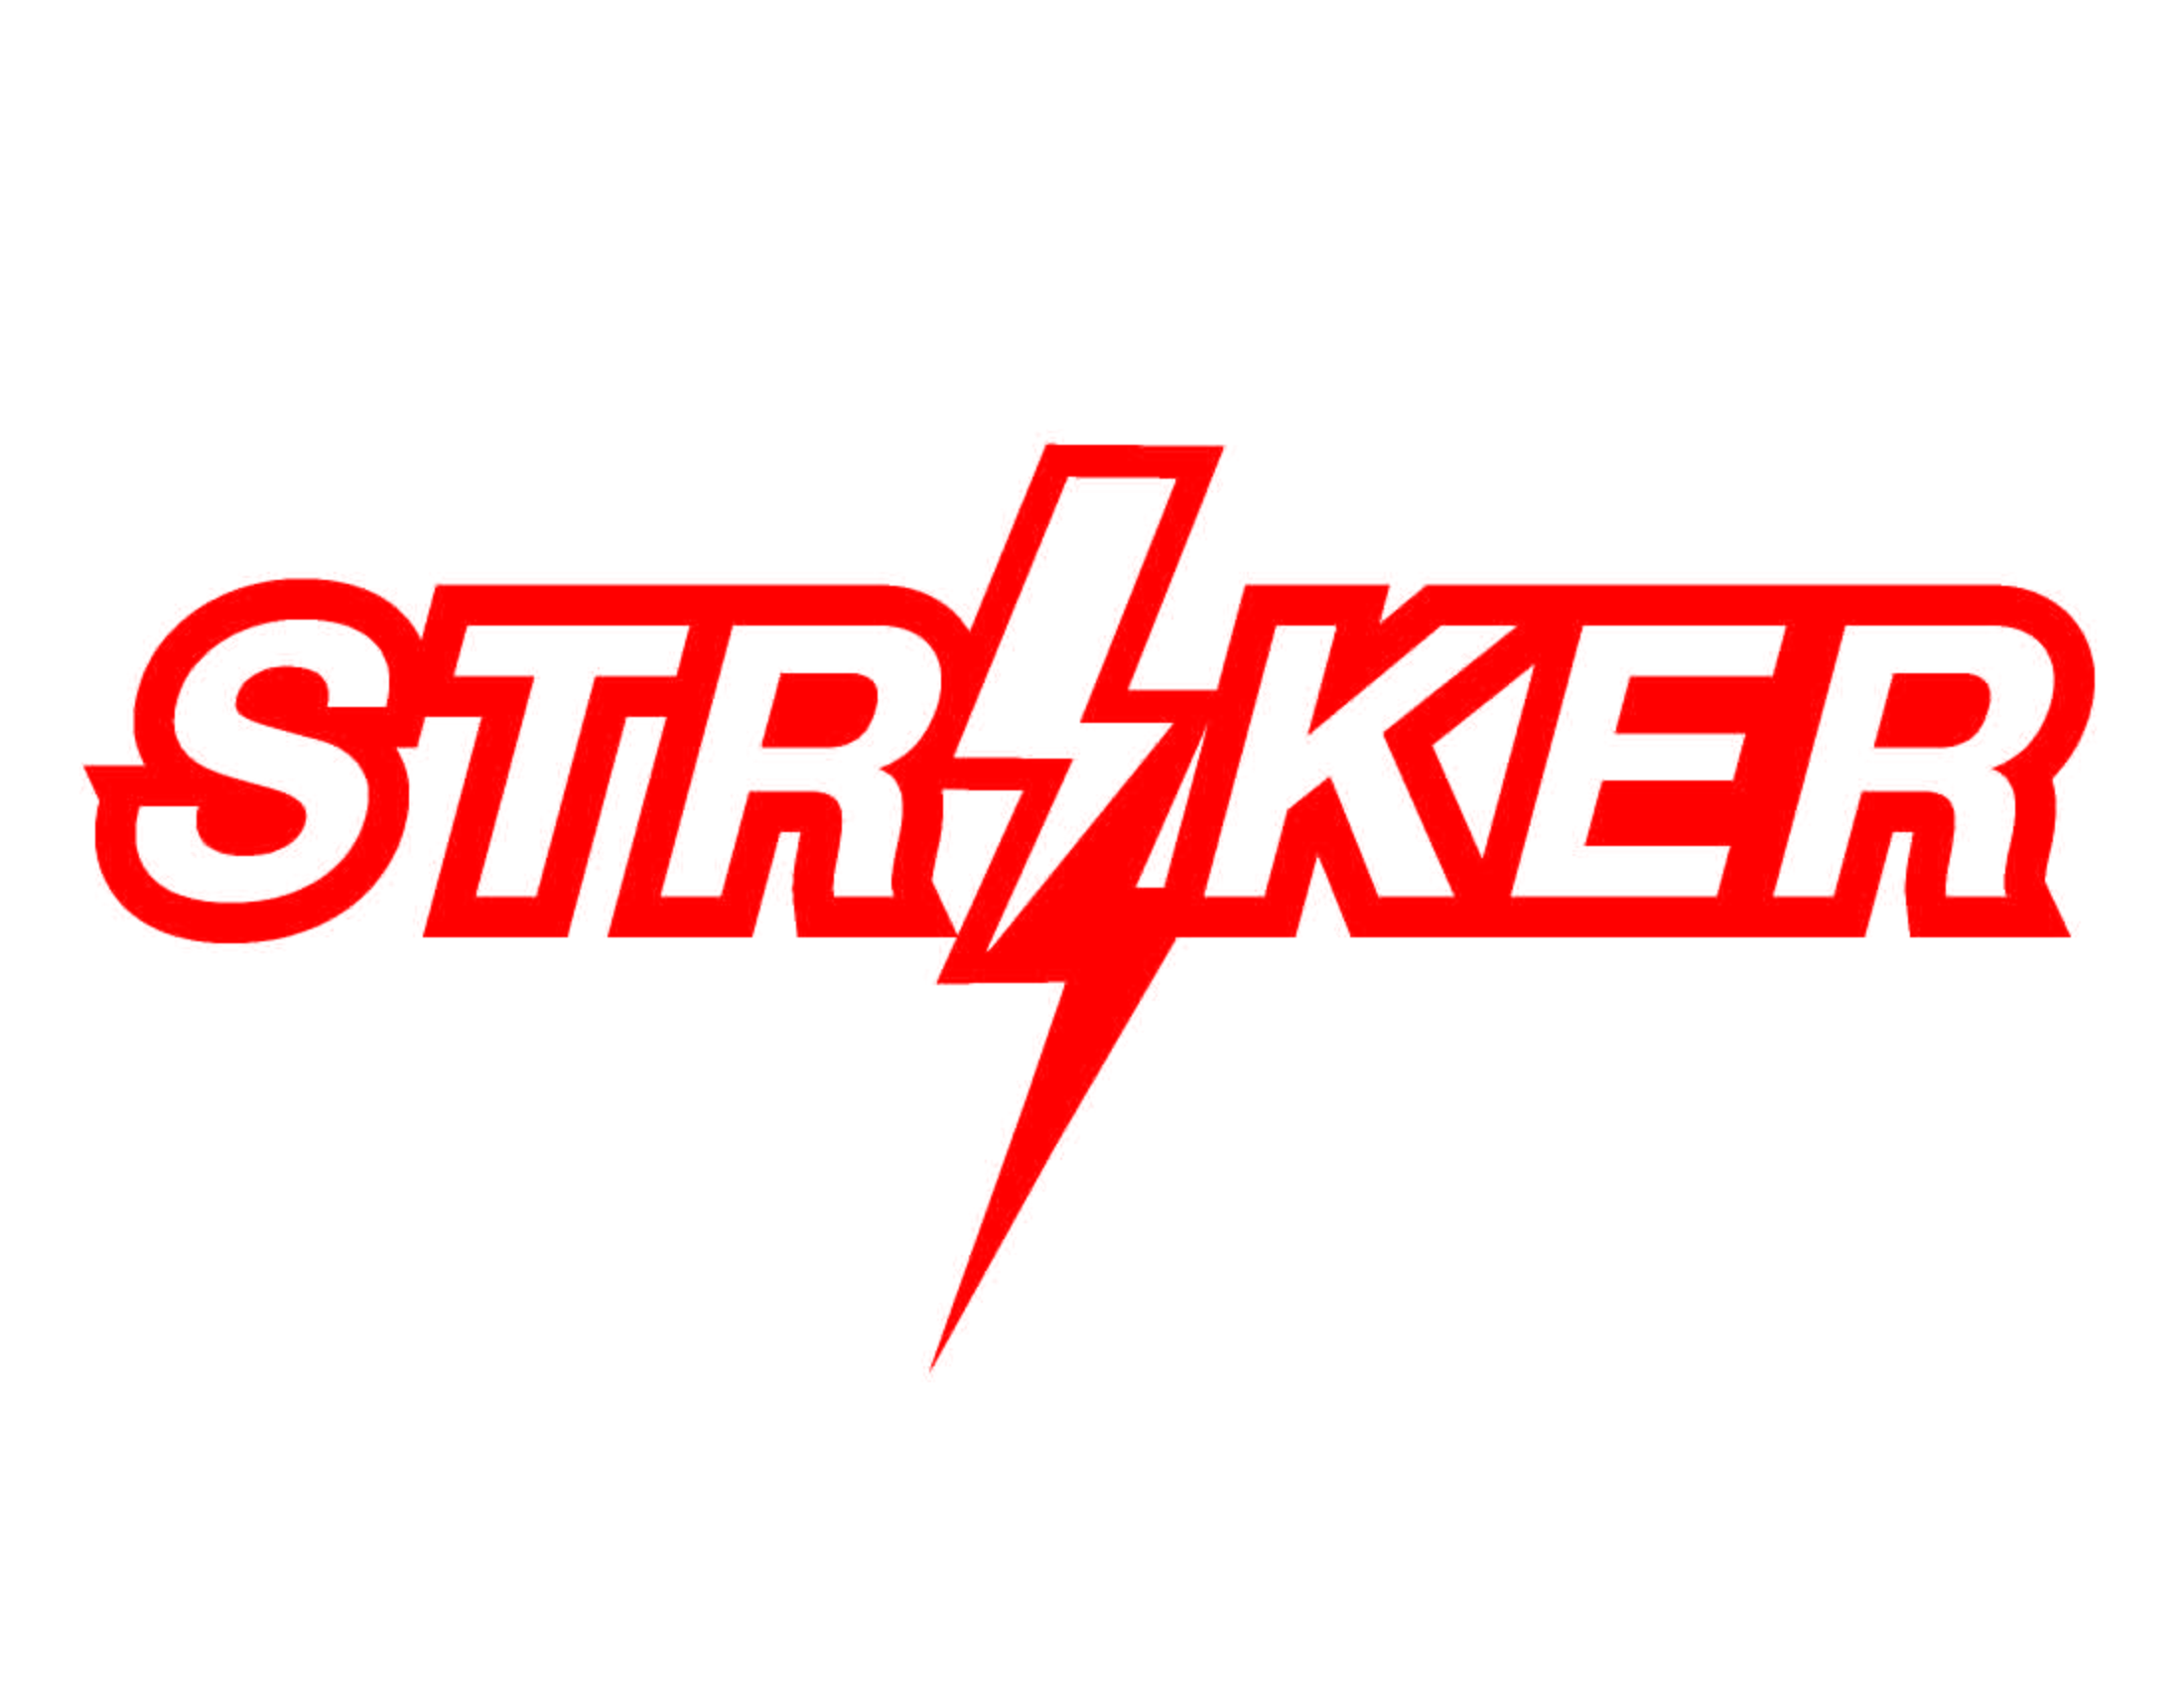 Strikers Logo - STRIKER LOGO | jayaredesign